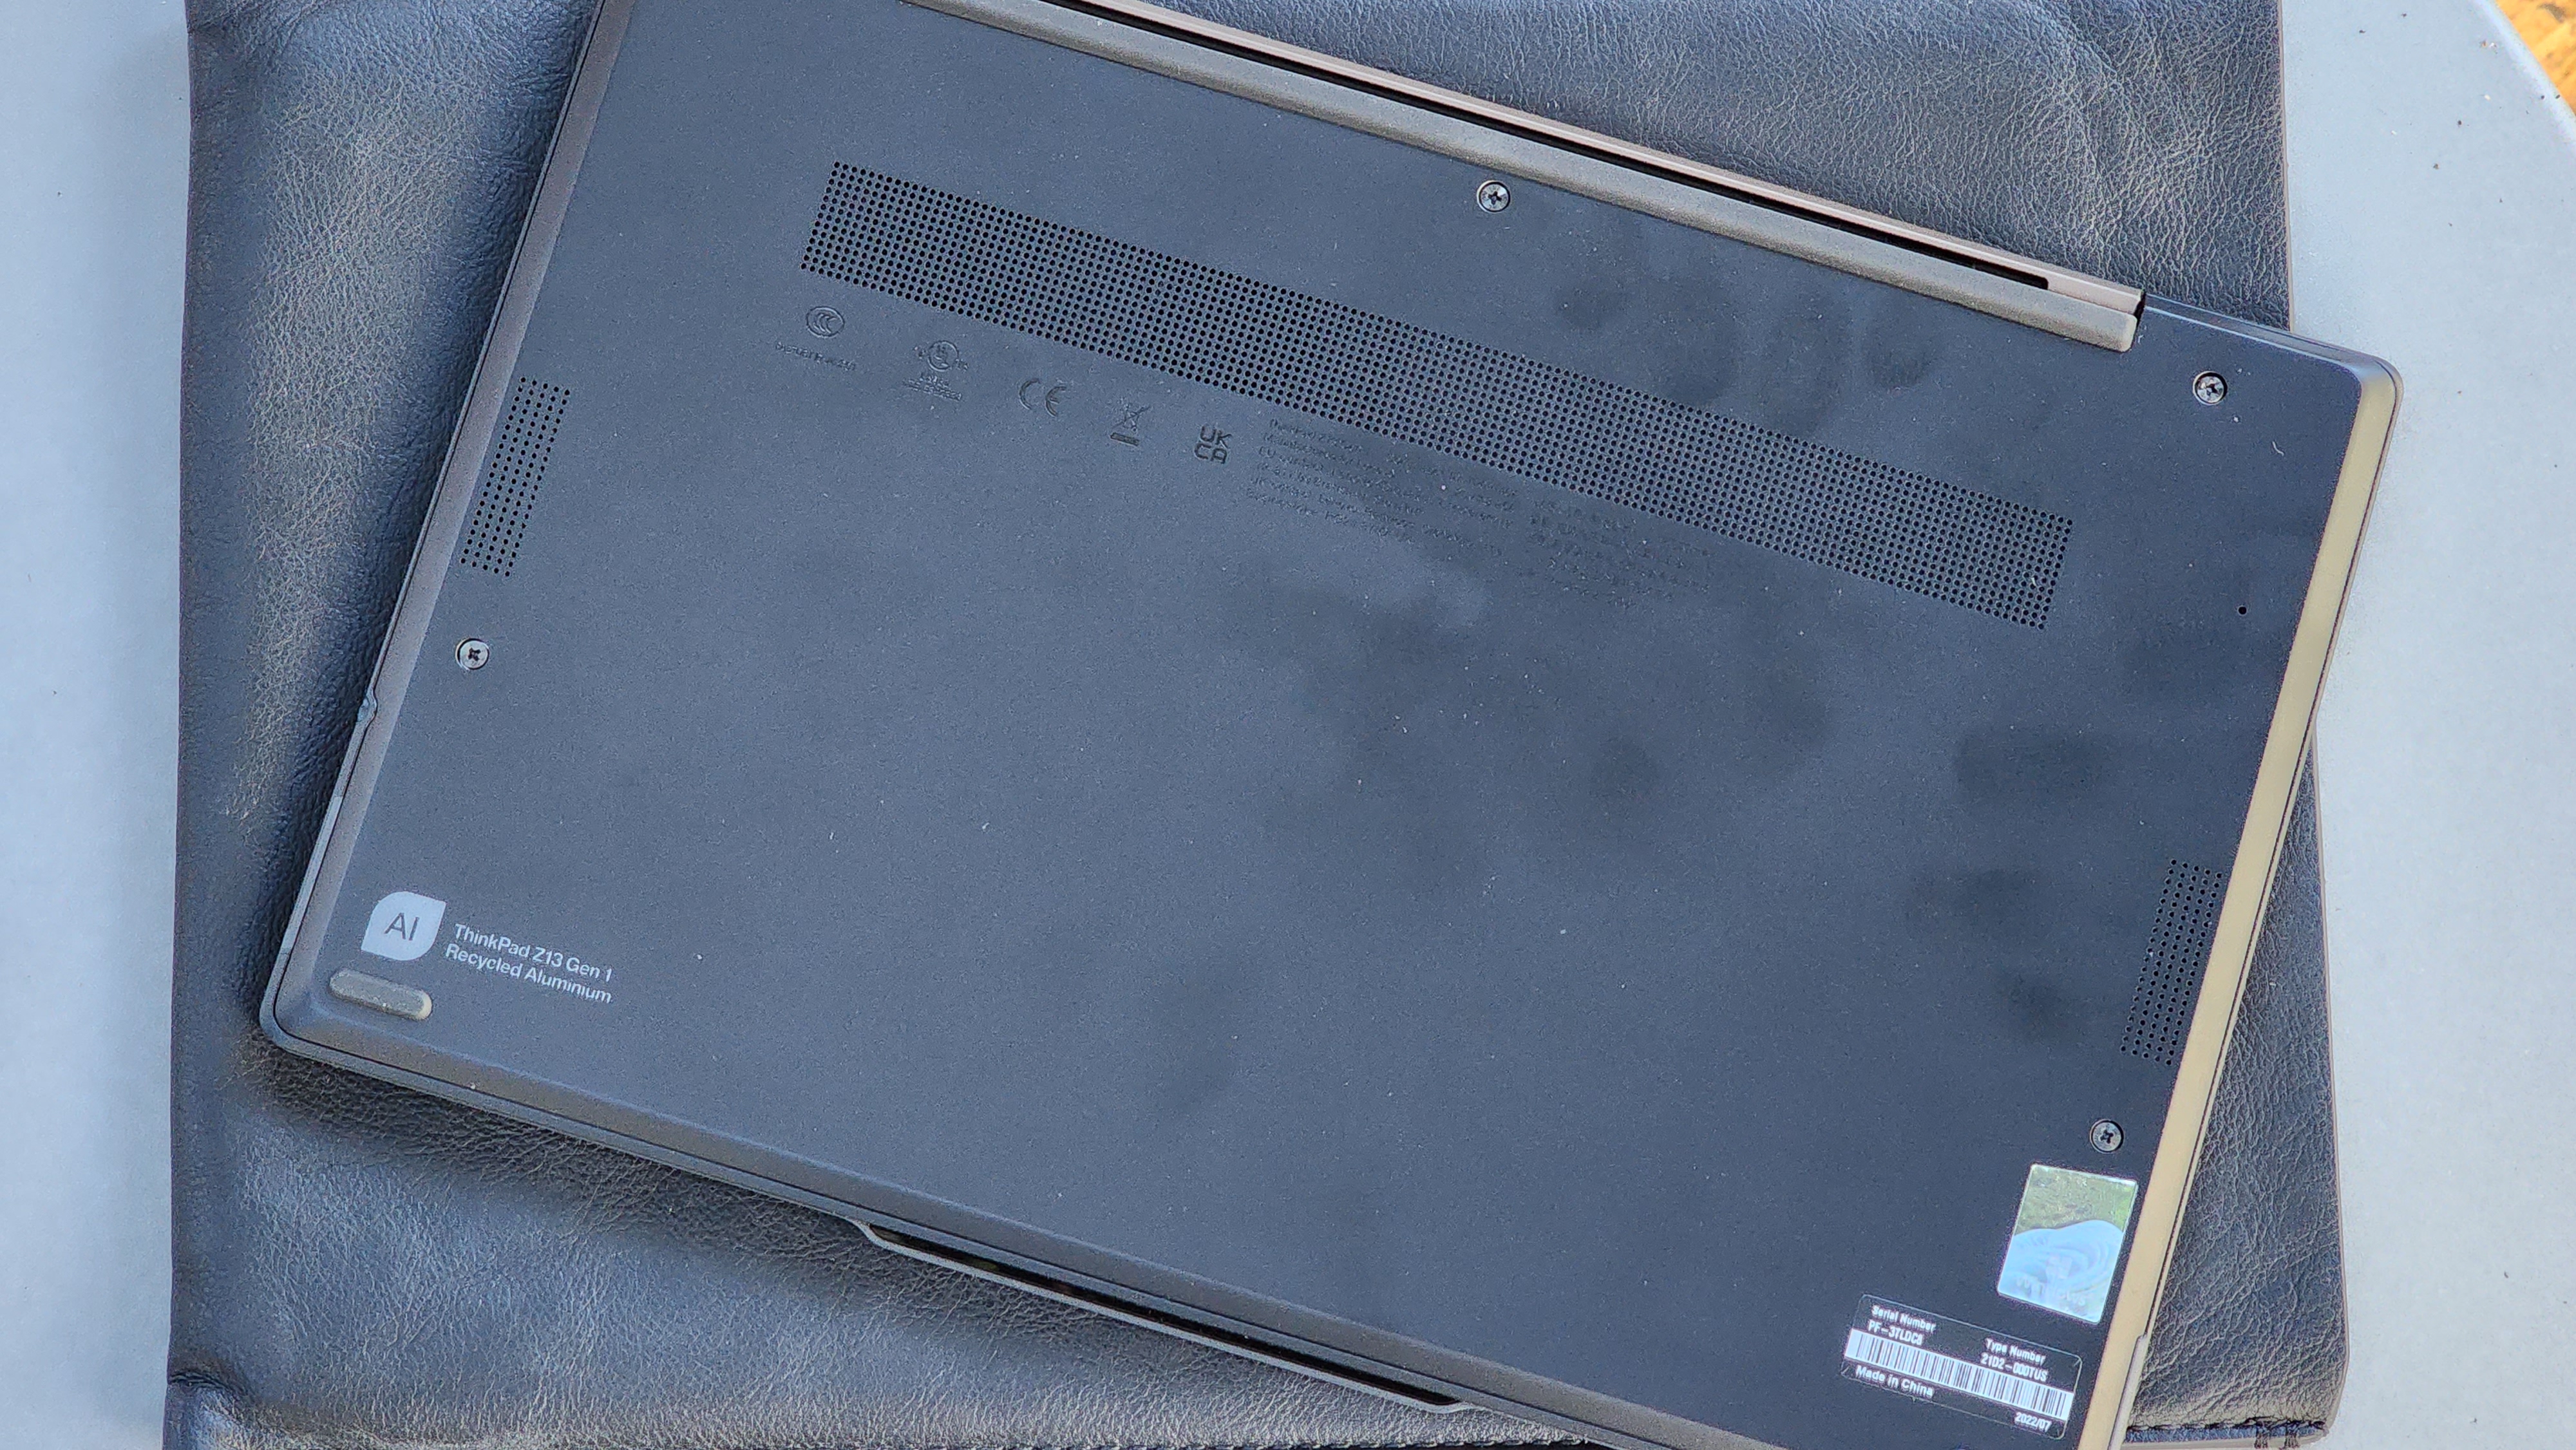 Aluminum bottom plate of the ThinkPad Z13 is a fingerprint magnet.